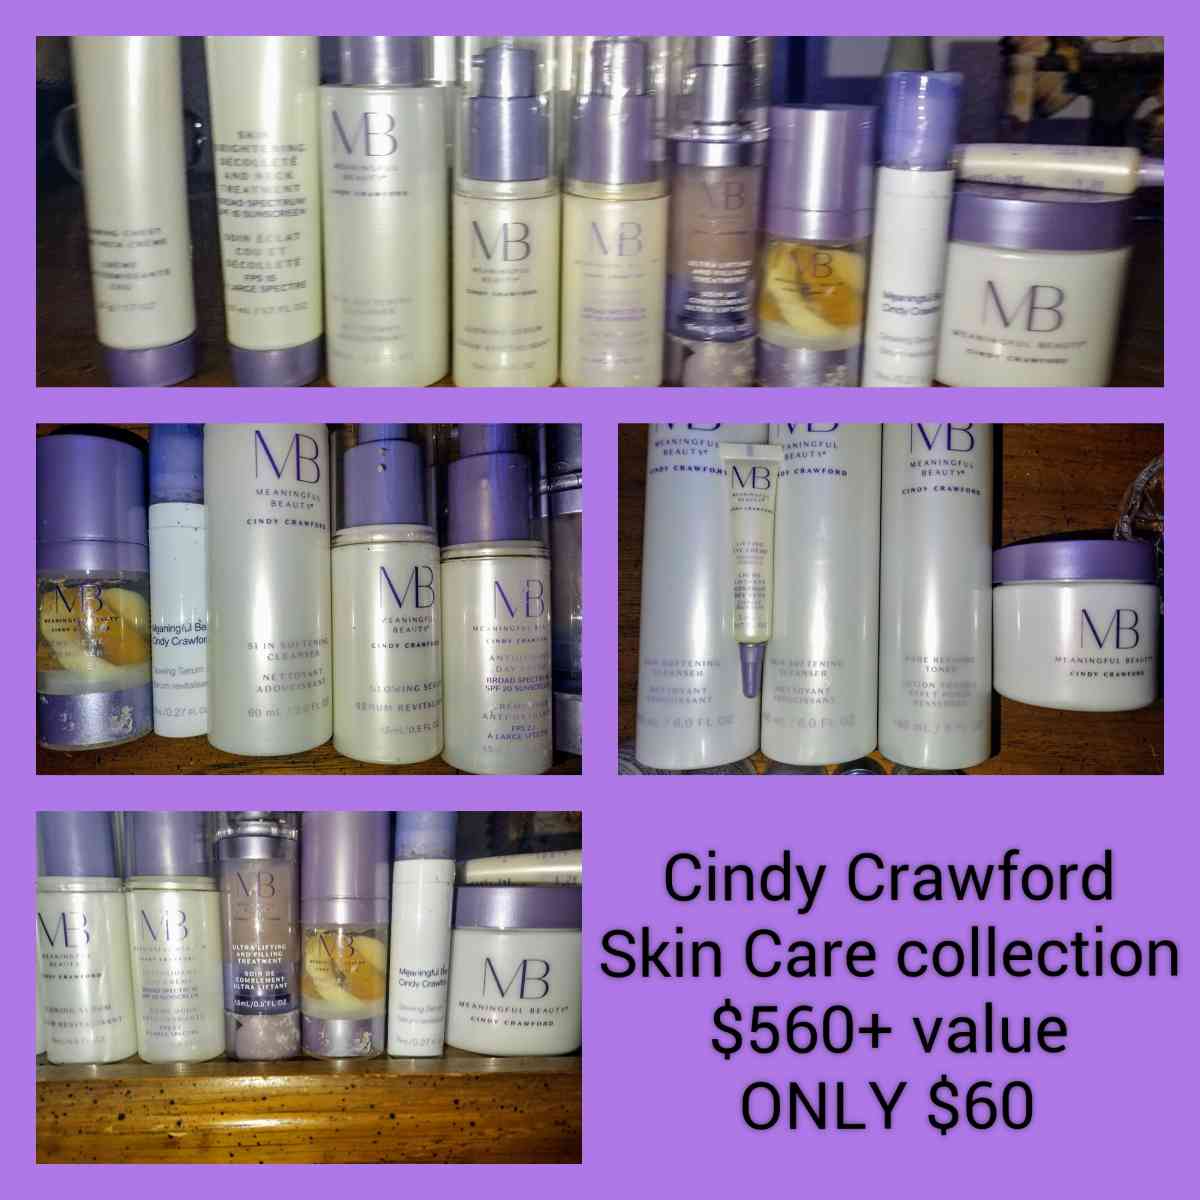 Cindy Crawford skin care